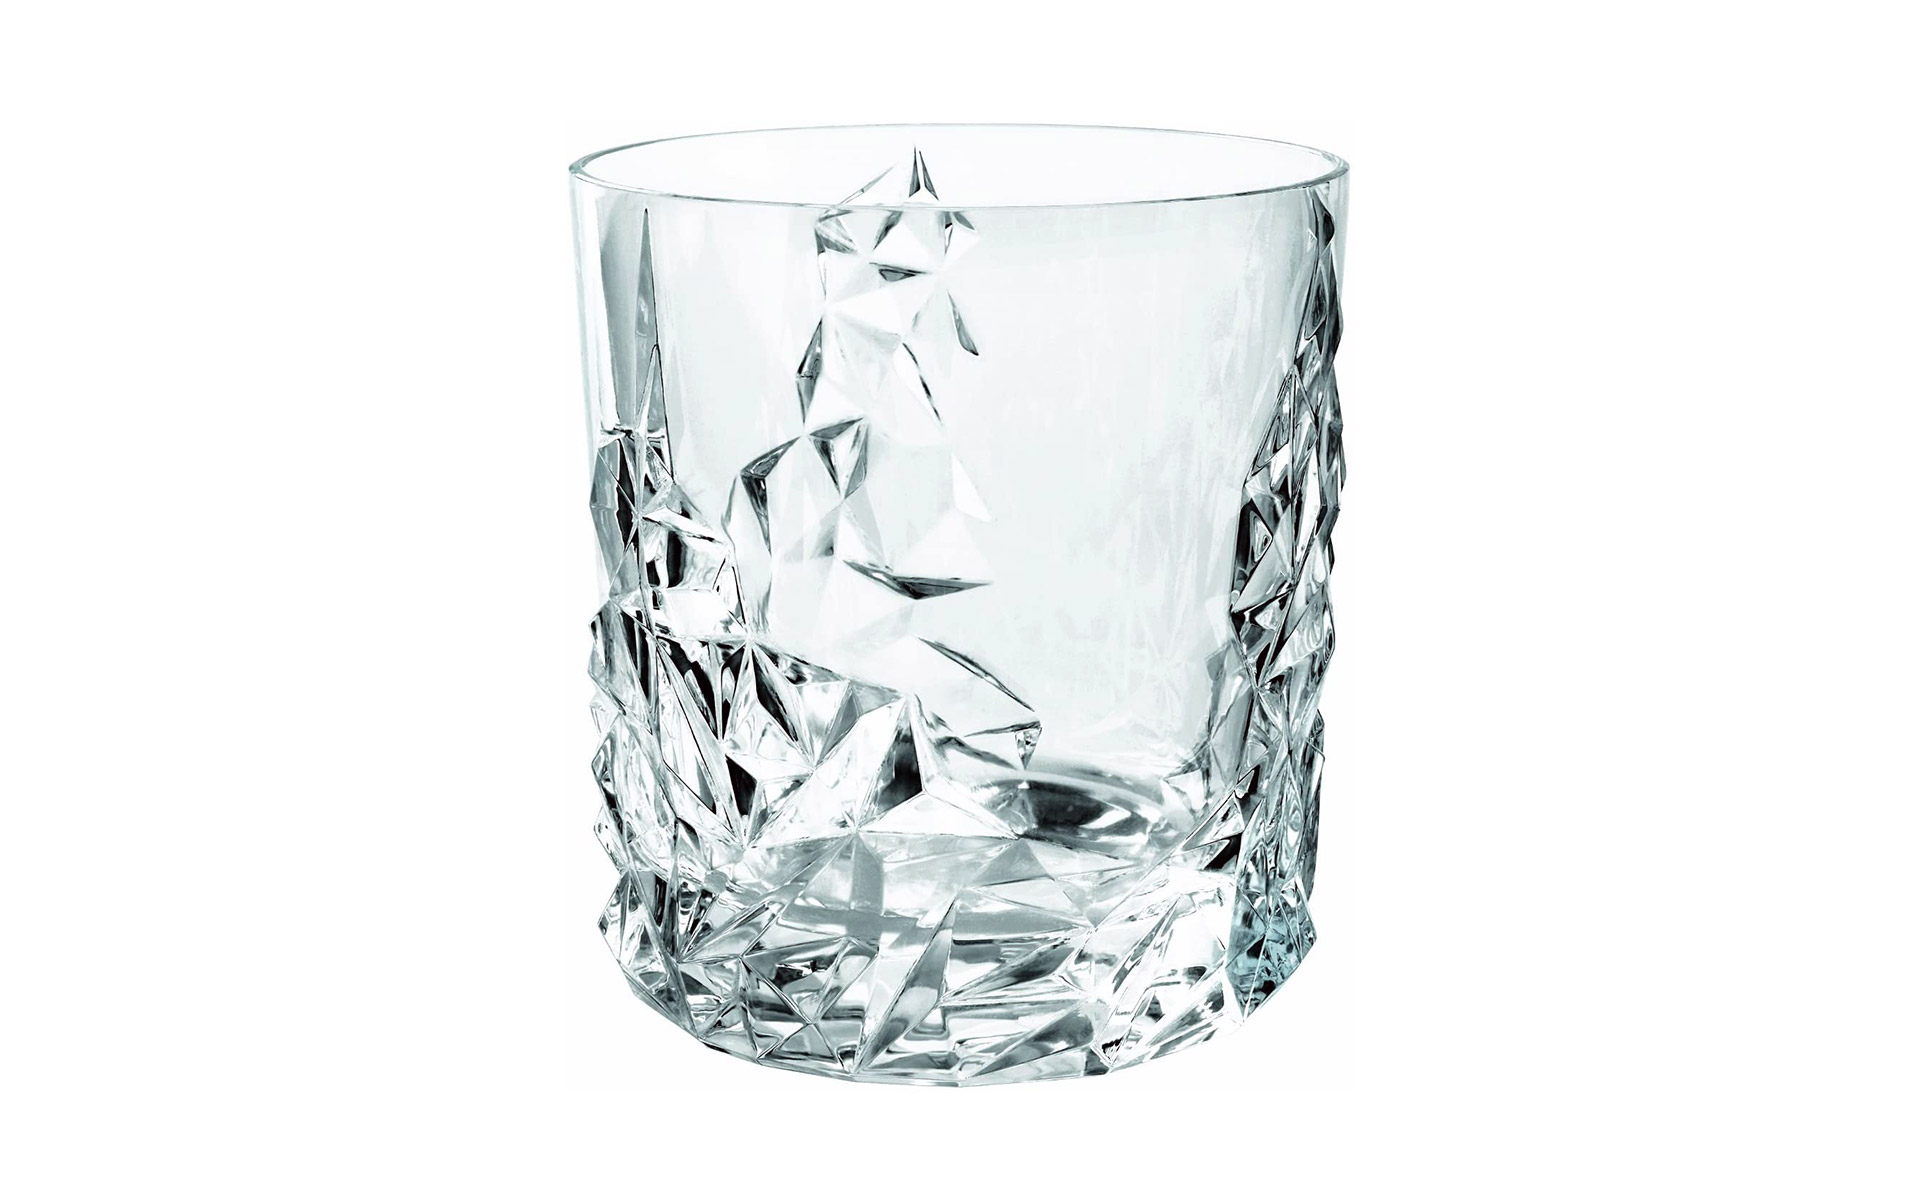 2er Set 400ml Whiskey Gläser Kristallgläser Tumbler Durch Starkes Glas WOQO Gin Gläser Whisky gläser in Geschenk Box WOQO Gin Gläser